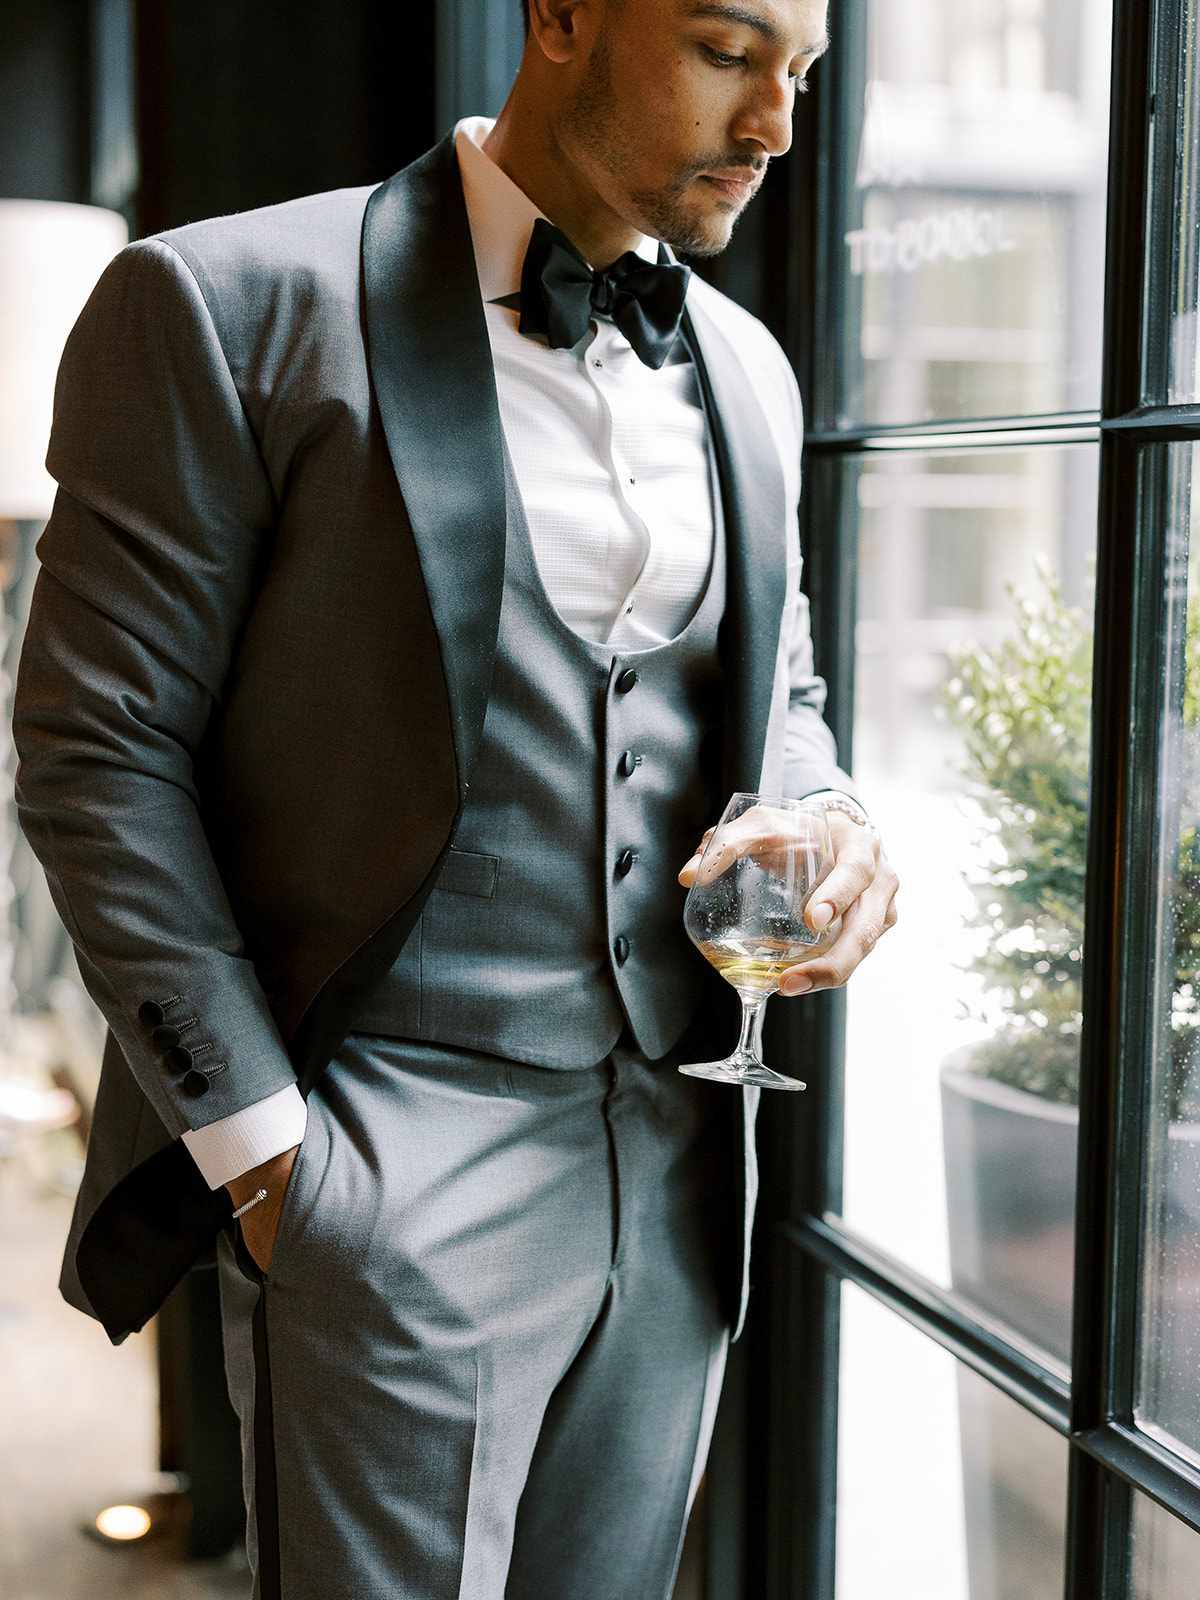 groom standing next to window with wine glass